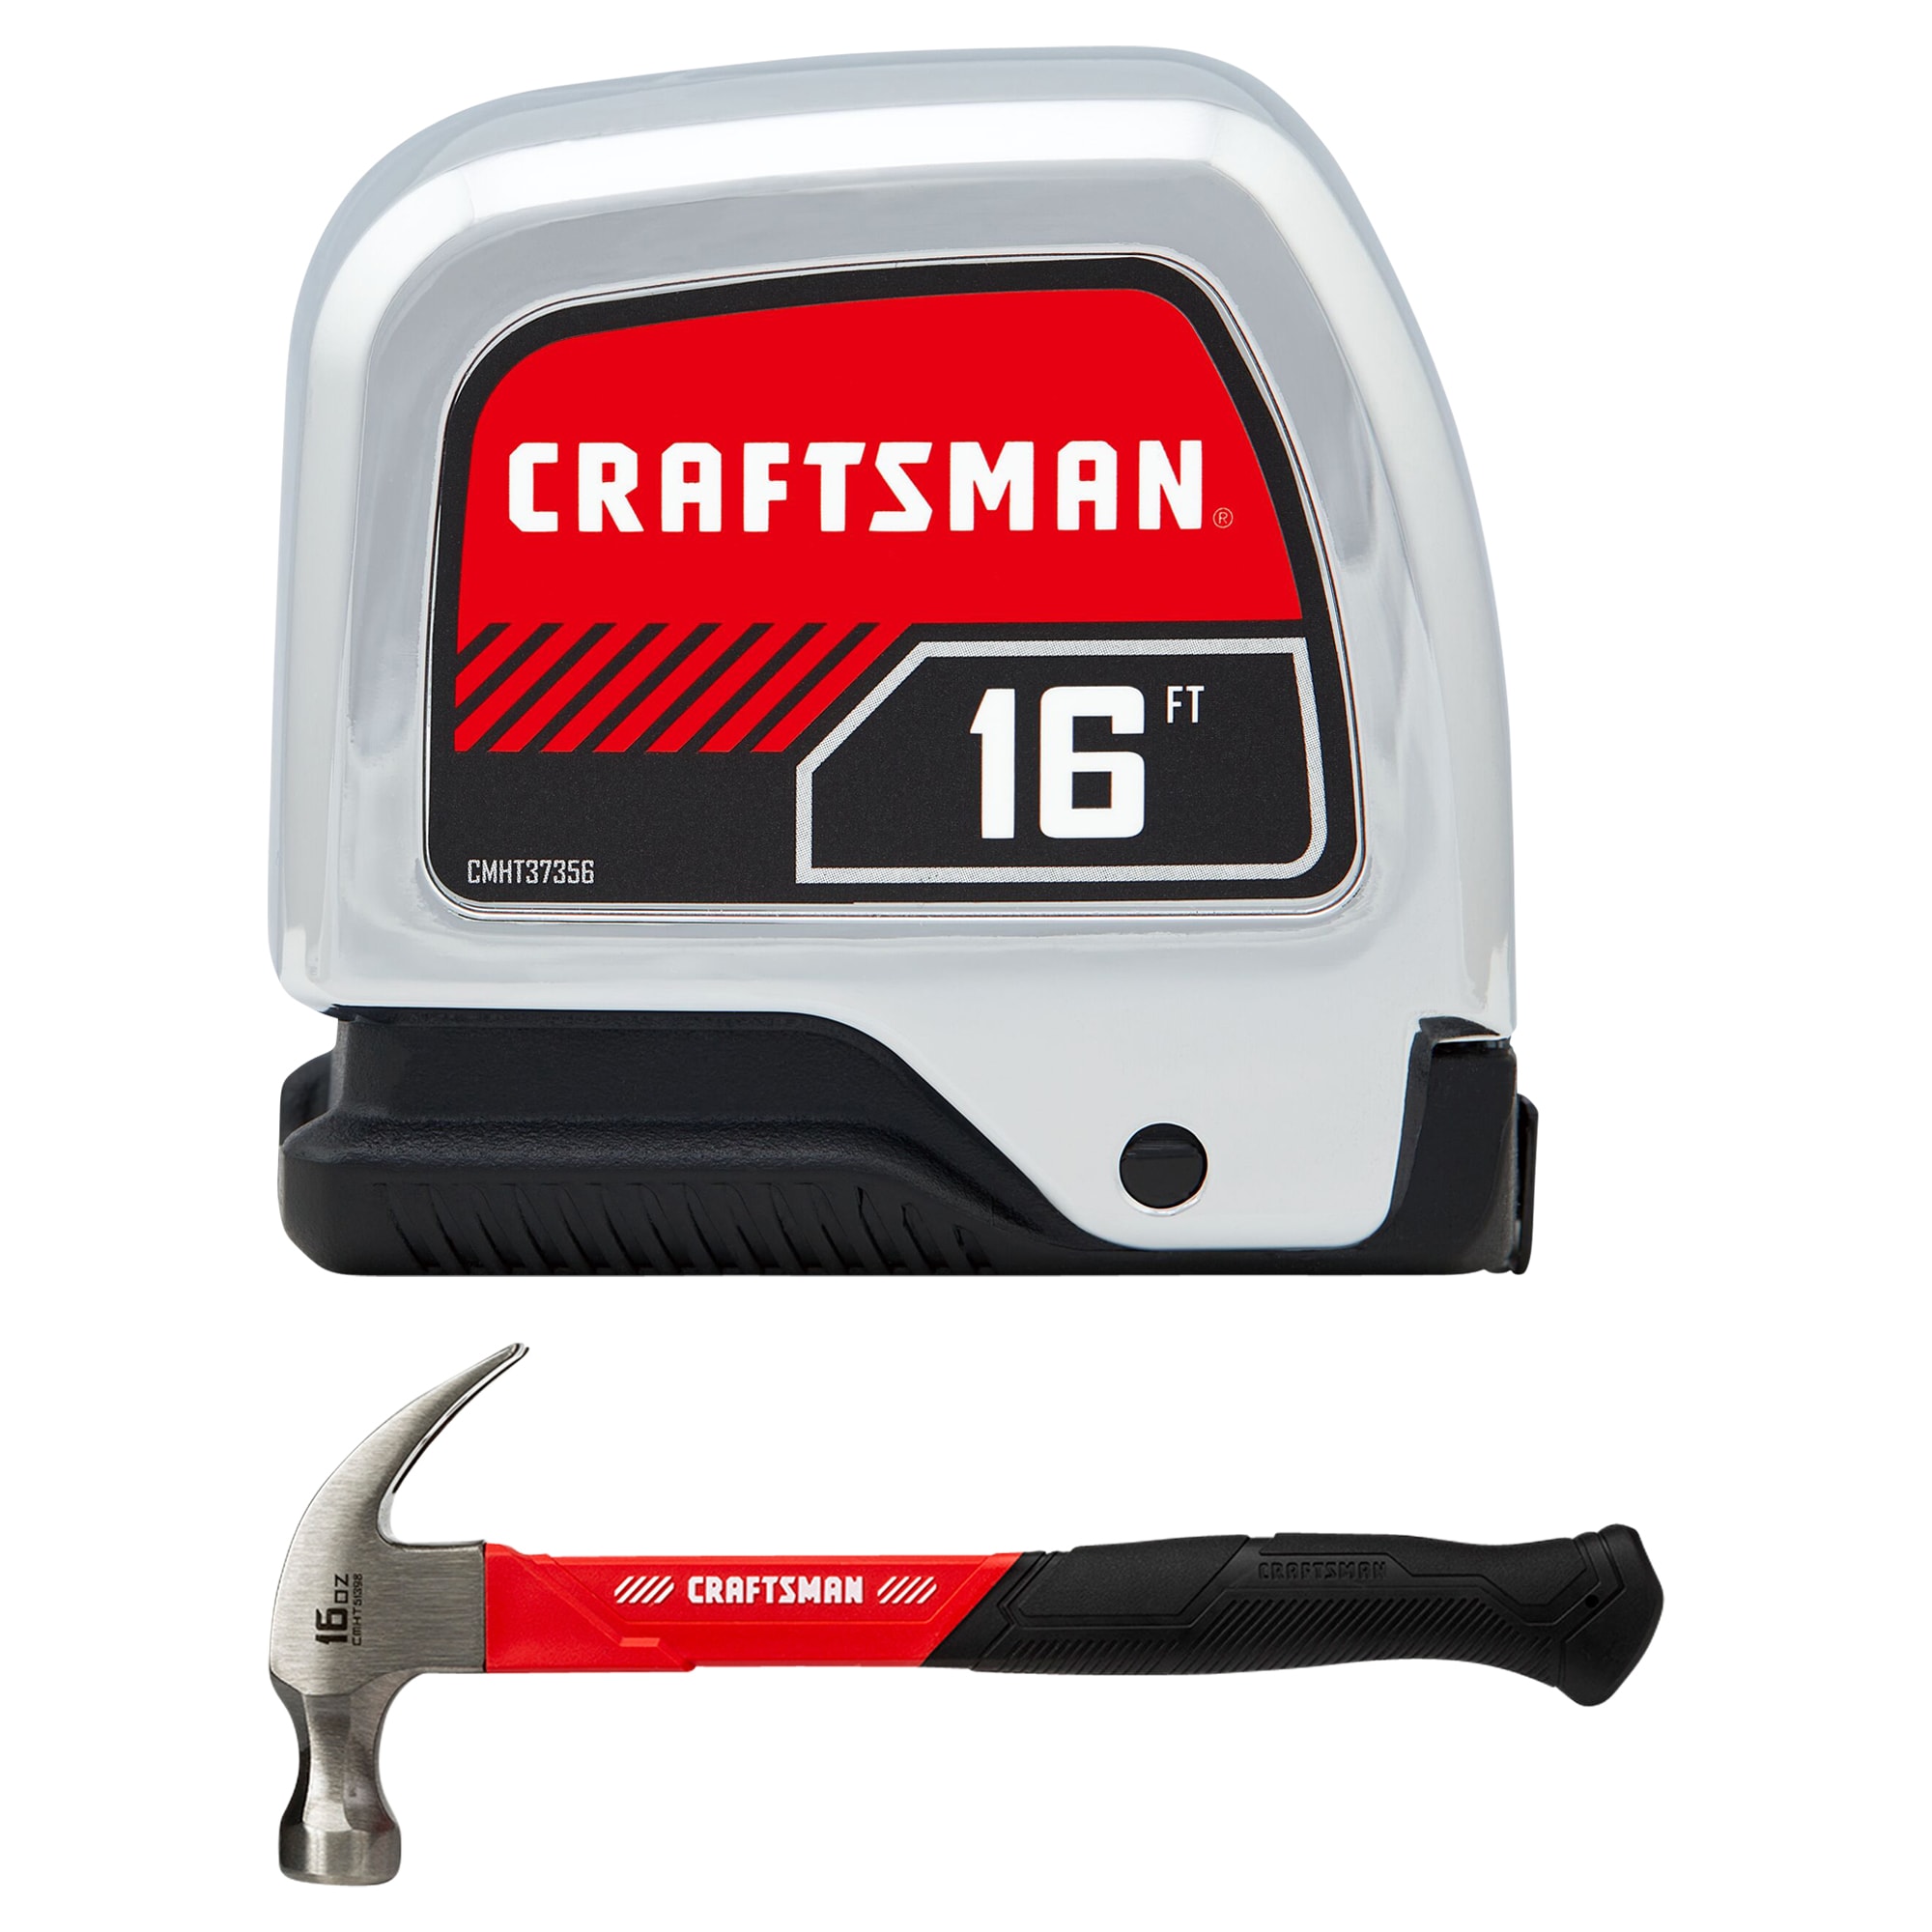 CRAFTSMAN 16-ft Auto Lock Tape Measure & 16-oz Smooth Face Steel Head Fiberglass Claw Hammer